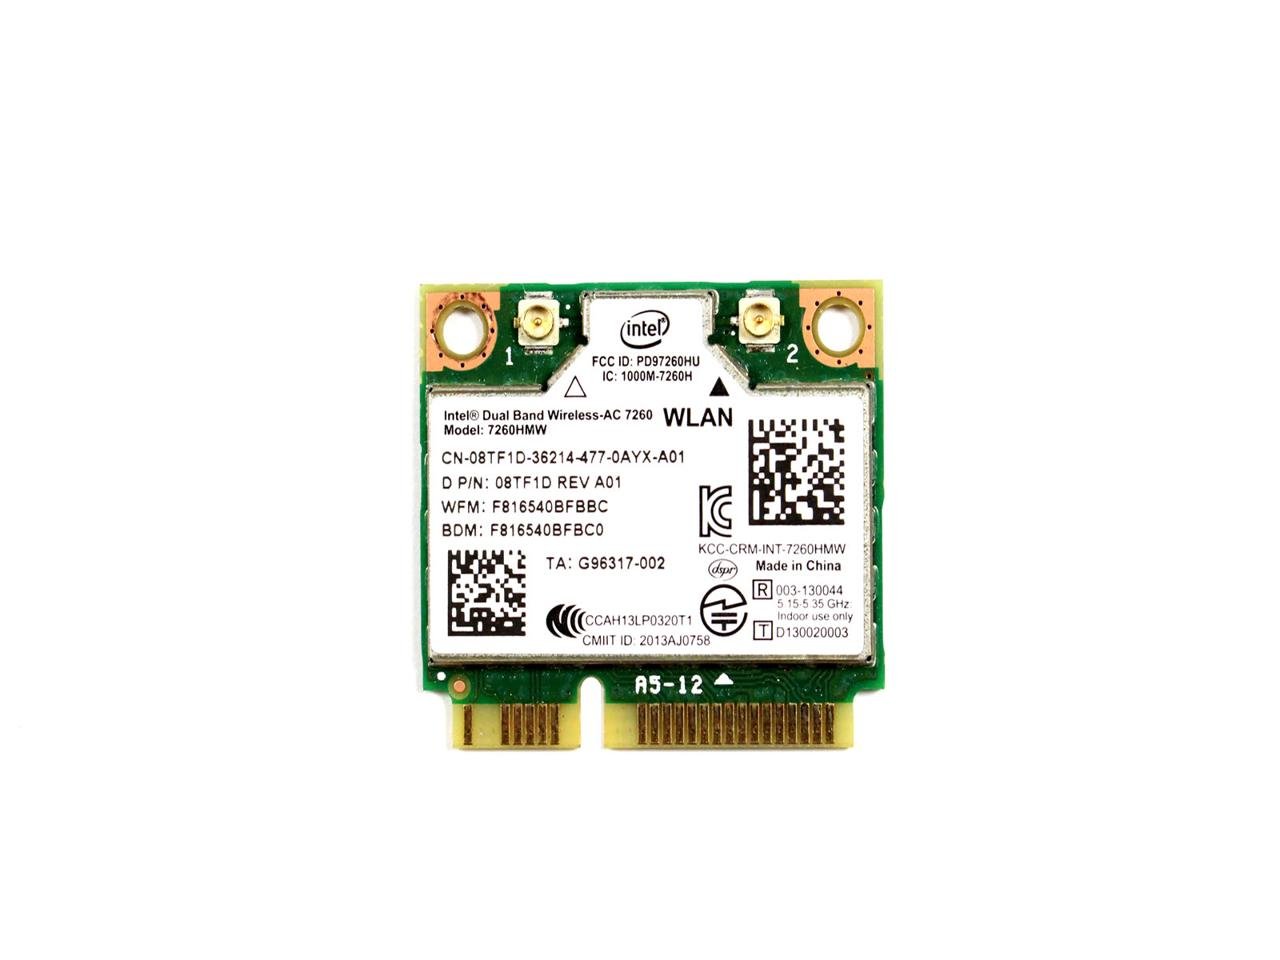 8TG1D REV A01  Intel Dual Band Wireless-AC 7260 WLAN WiFi 802.11 ac/a/b/g/n + Bluetooth 4.0 Half-Height Mini-PCI Express Card.